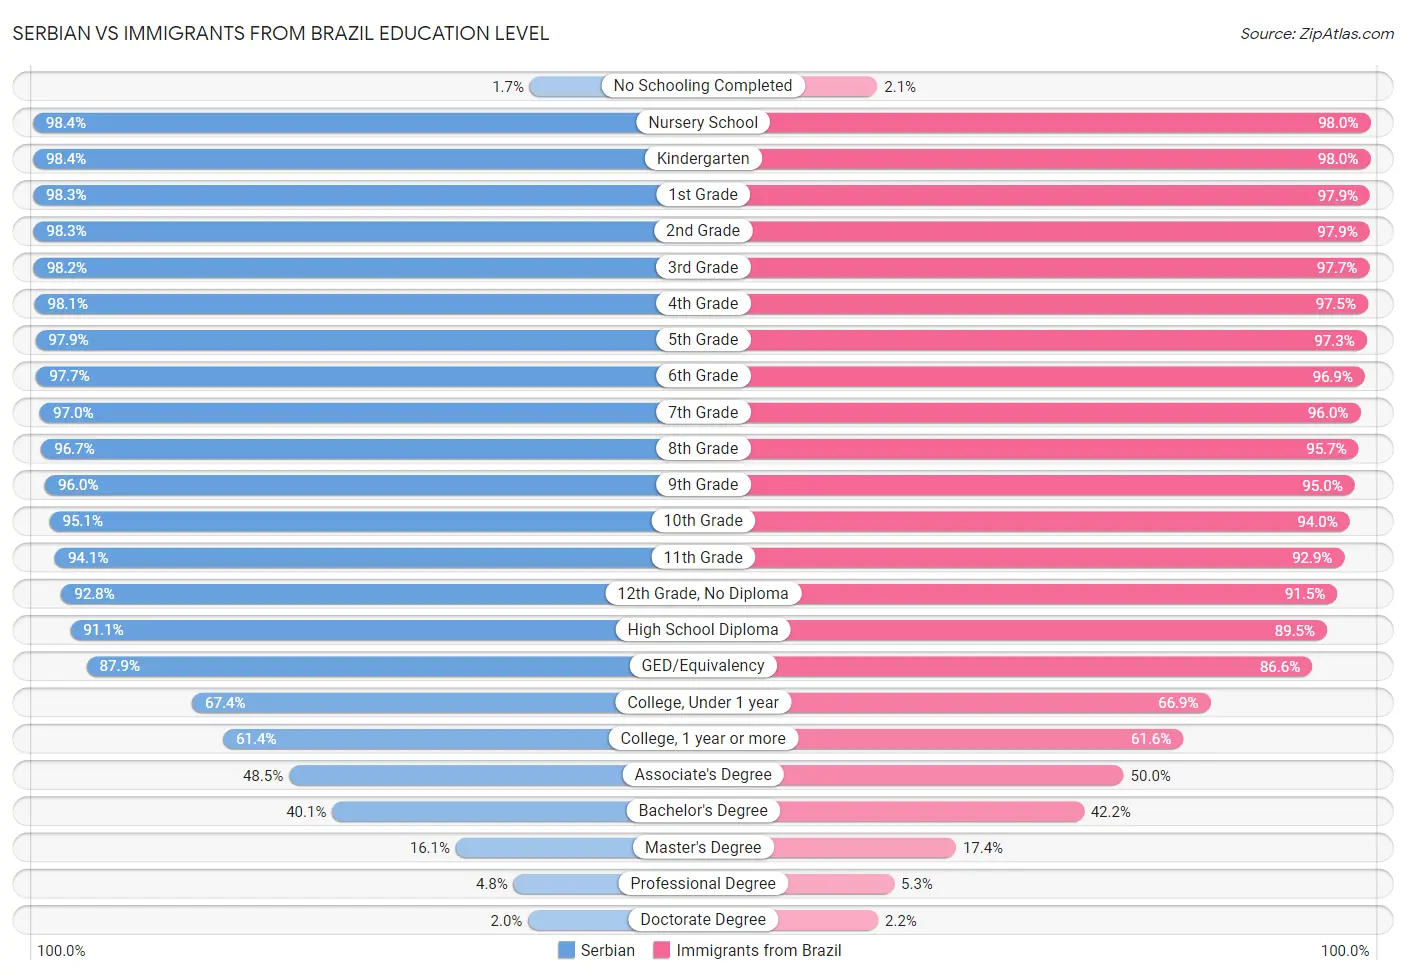 Serbian vs Immigrants from Brazil Education Level